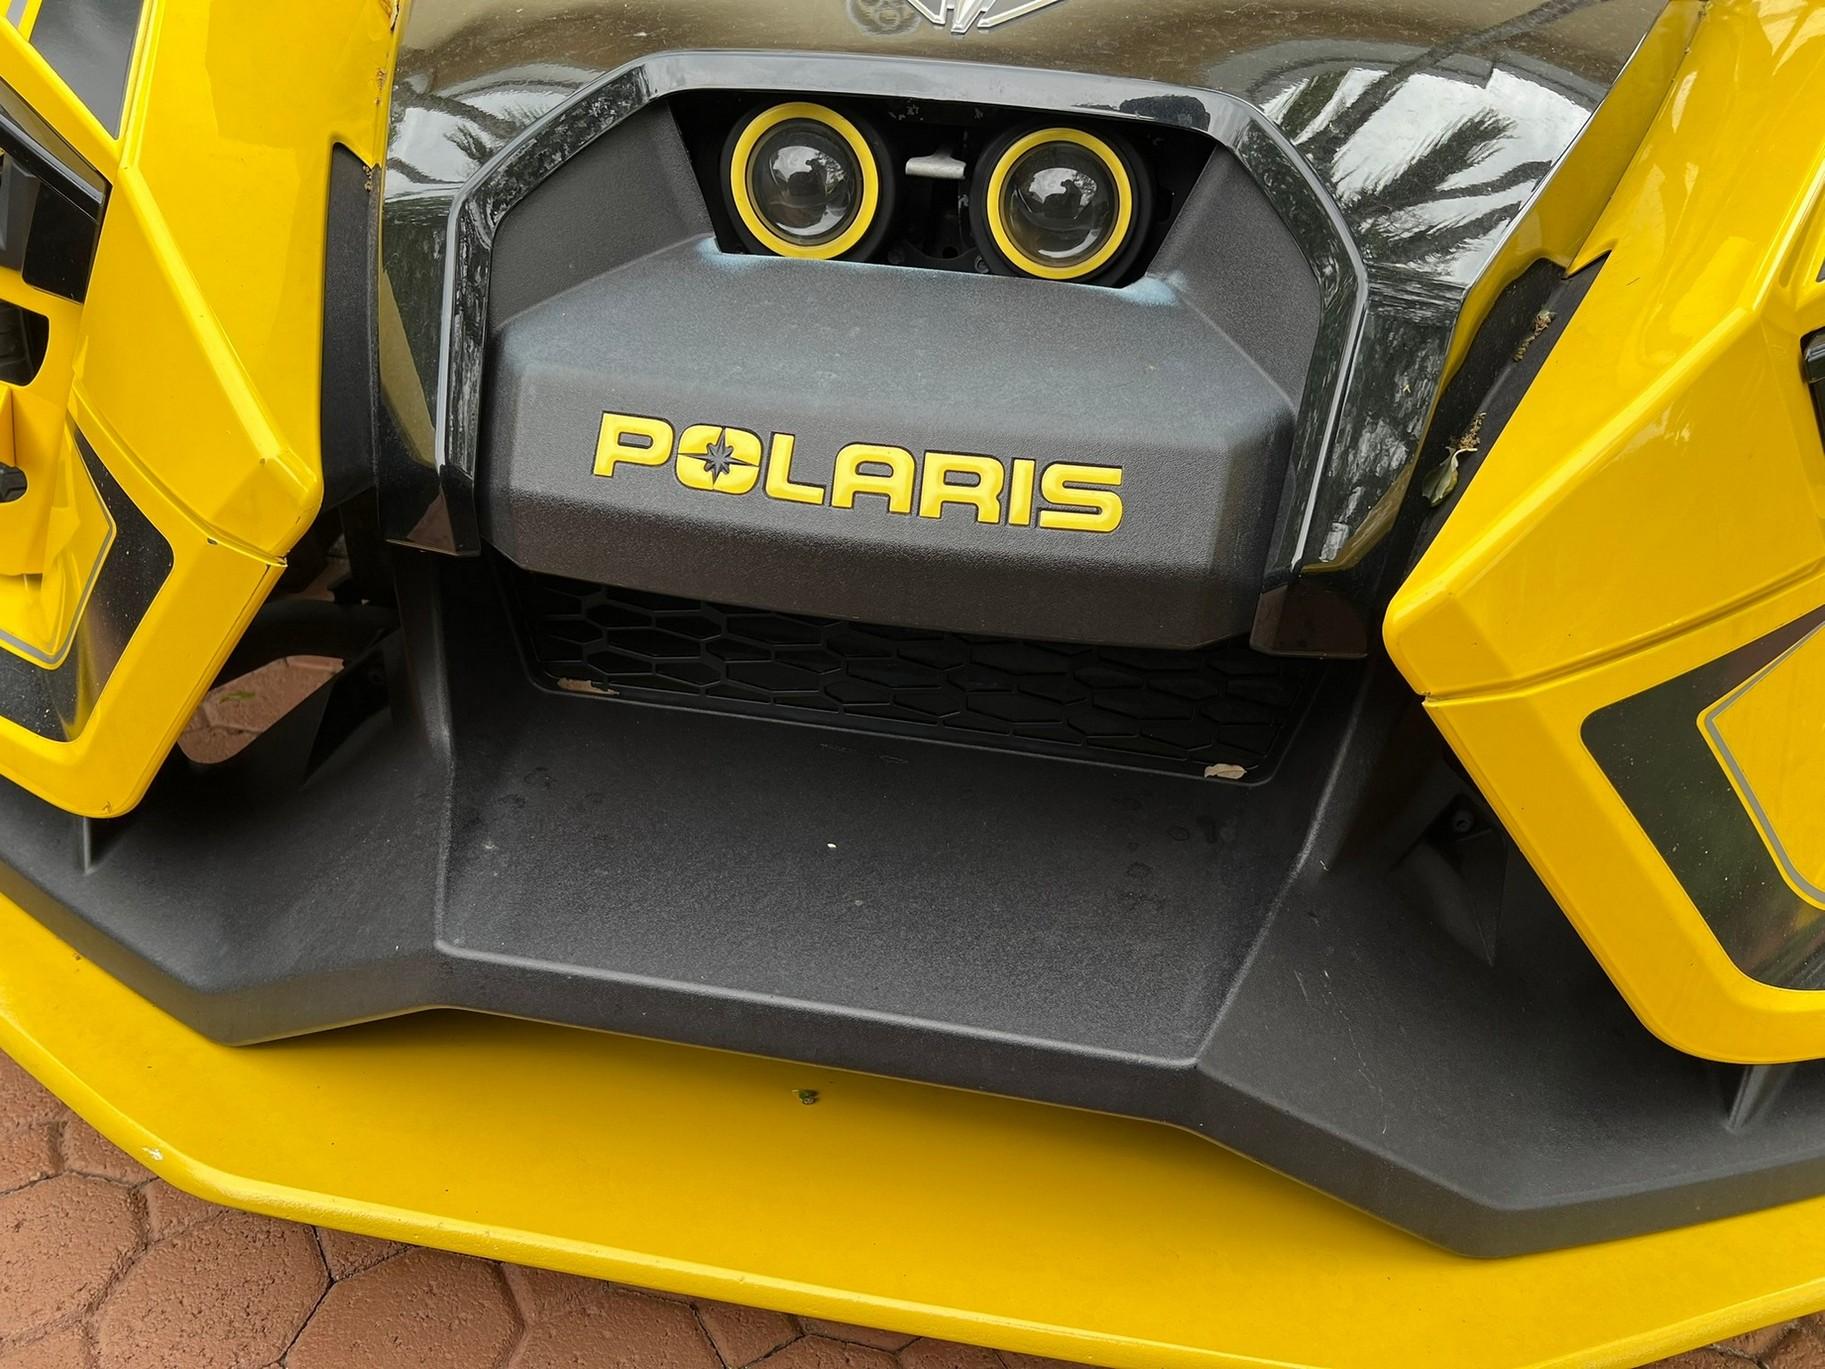 2019 POLARIS SLINGSHOT SLR - 13648 MILES ON ODOMETER - VIN 57XAARFA8K813176